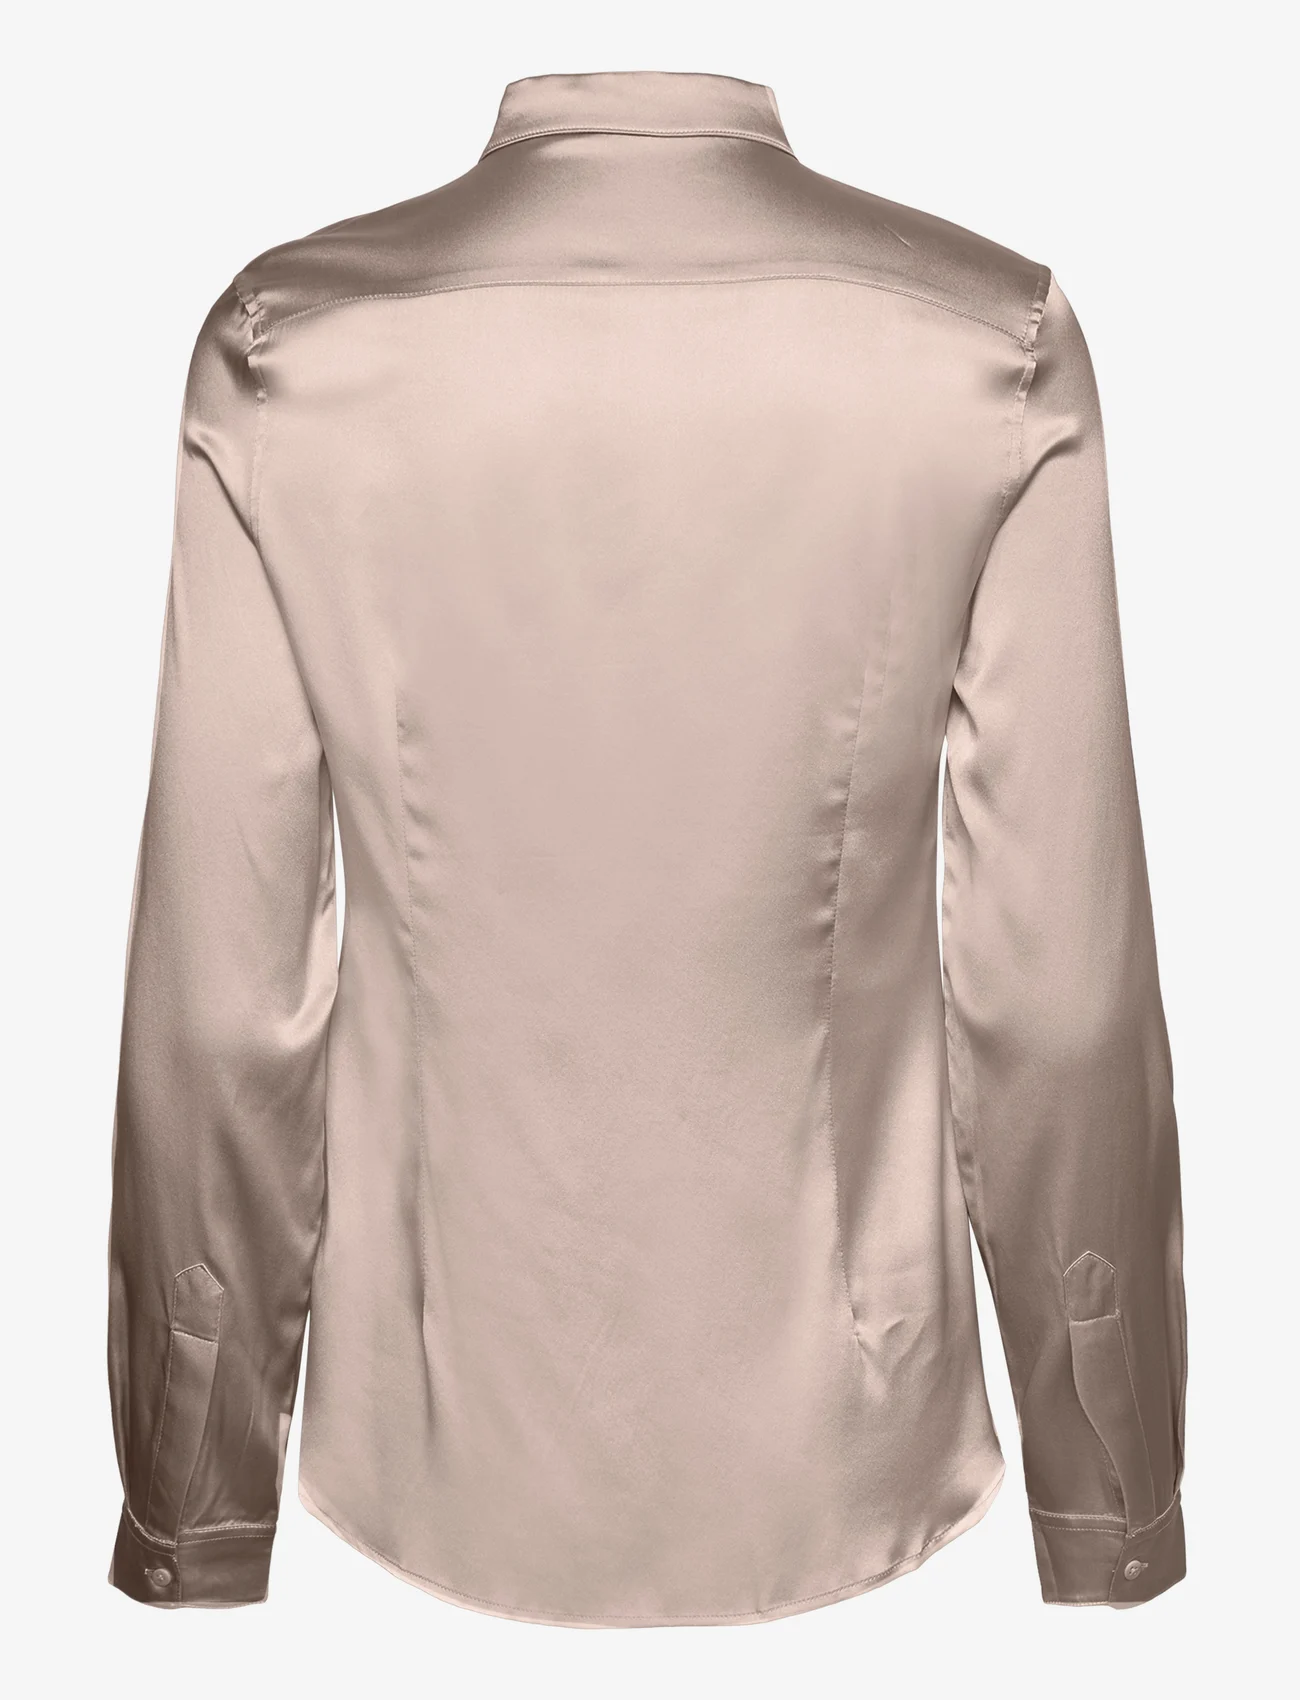 Cathrine Hammel - Silk satin a-line blouse - marškiniai ilgomis rankovėmis - warm cream - 1